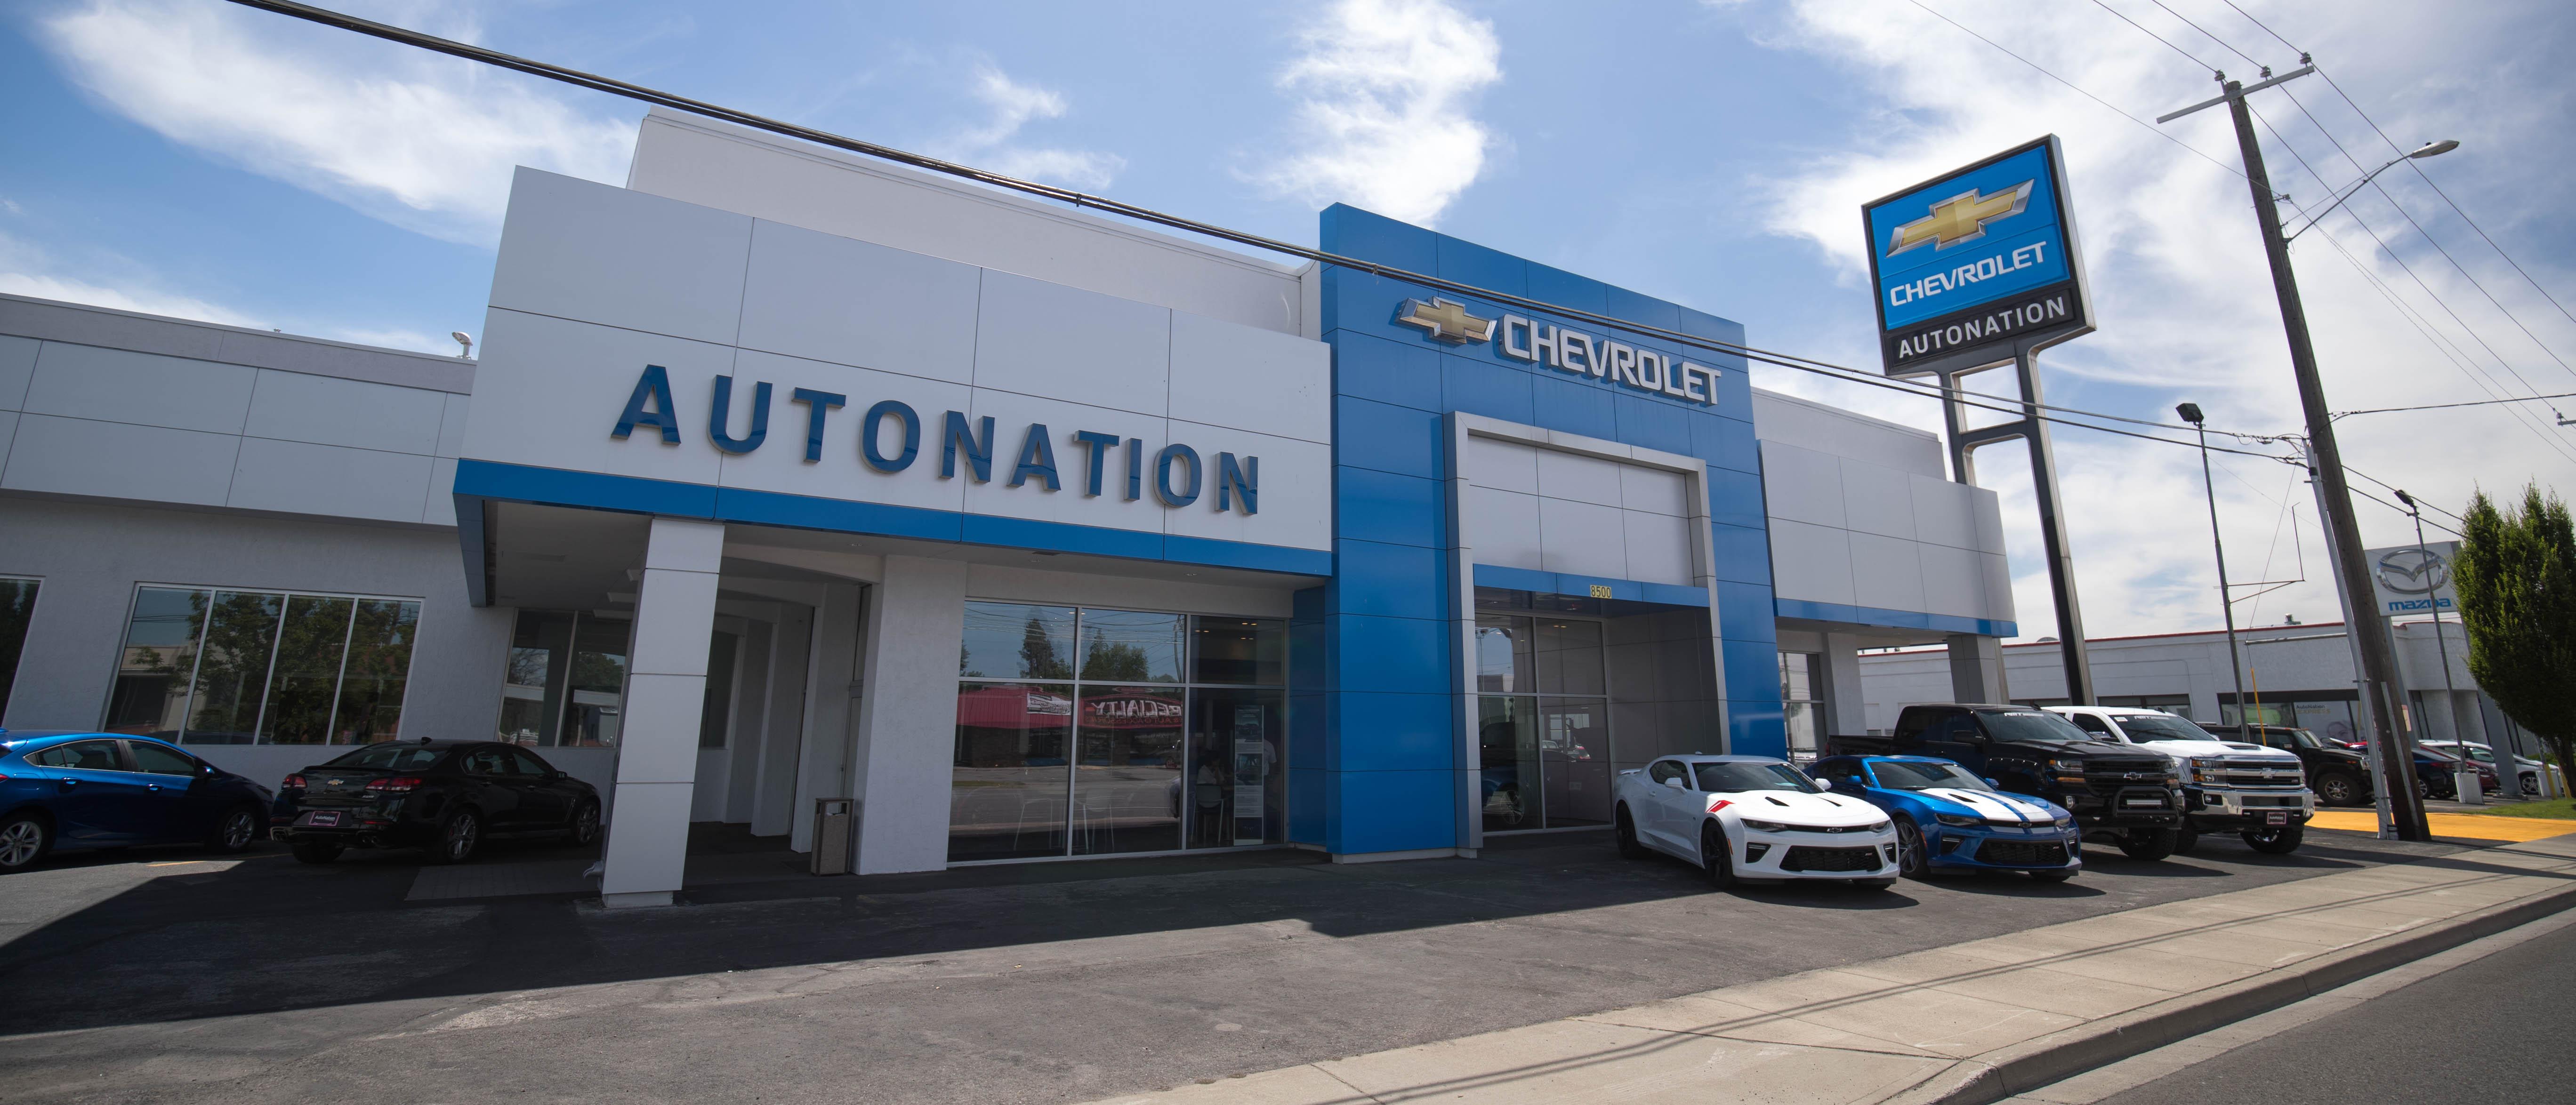 AutoNation Chevrolet Spokane Valley